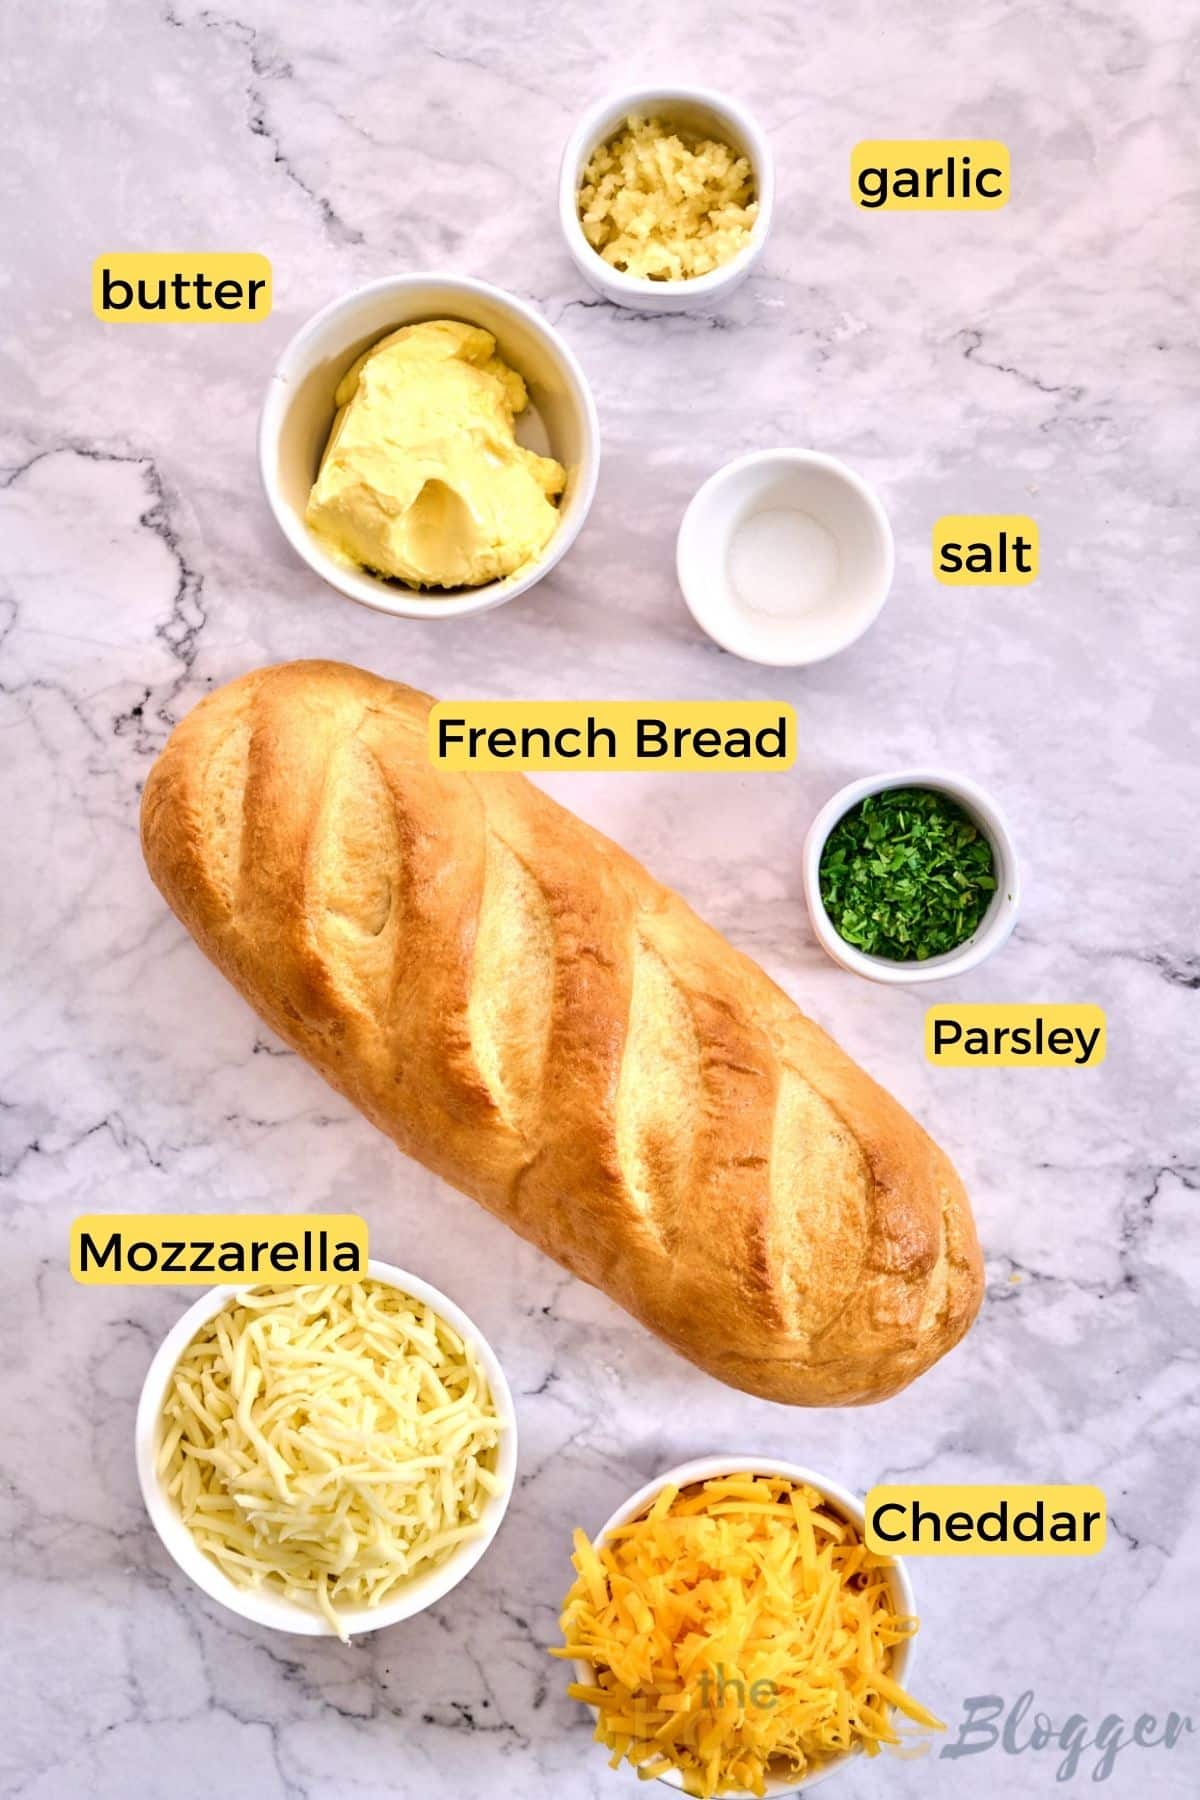 thefoodieblogger Cheesy Garlic Bread Ingredients